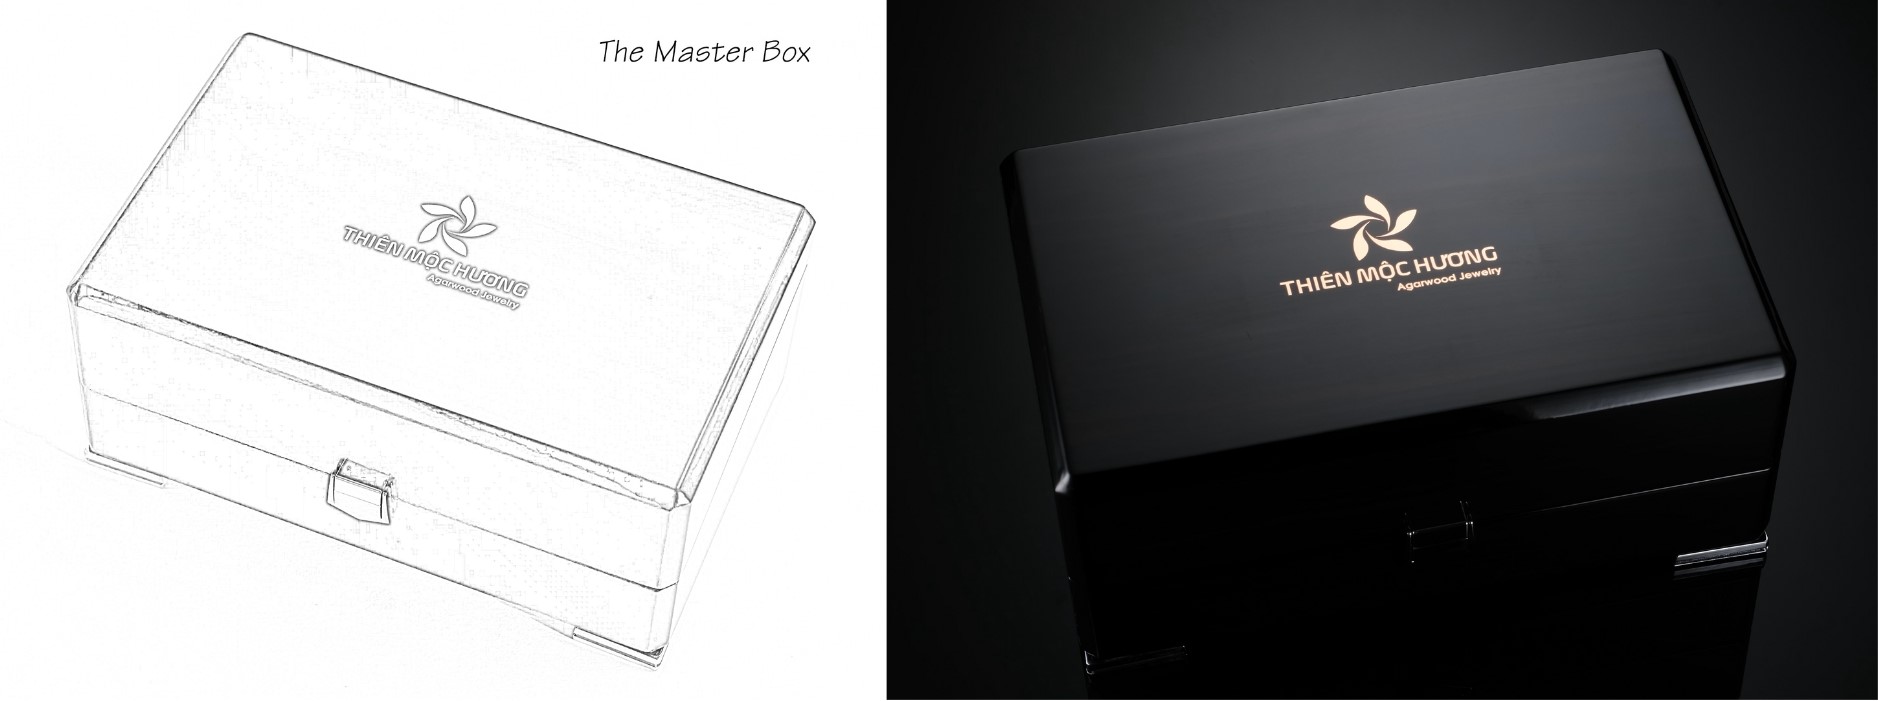 The Master Box